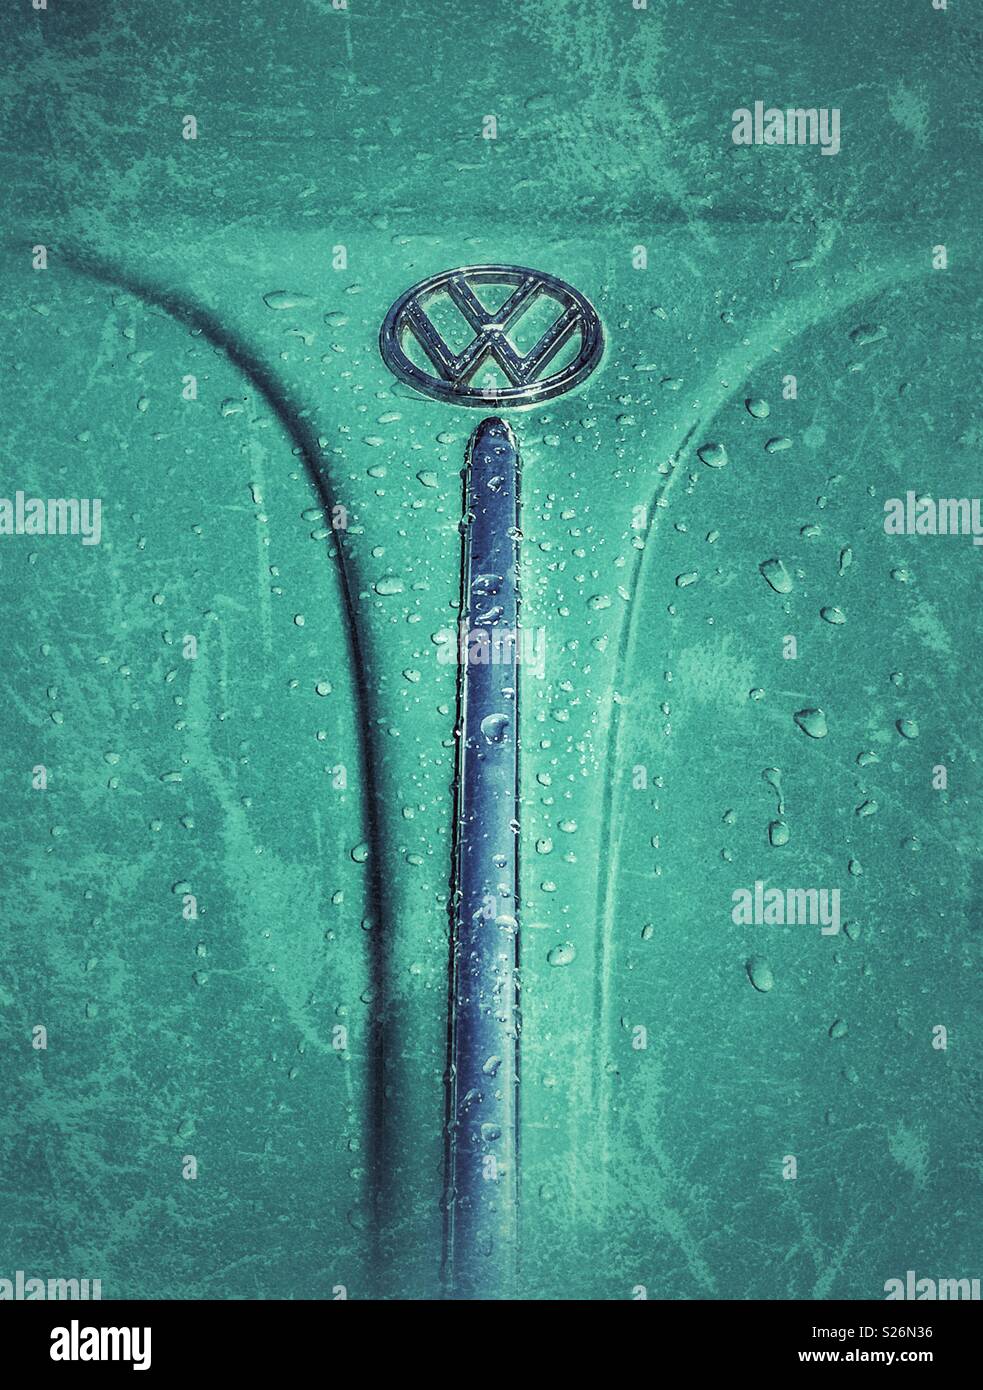 Wet vintage VW Beetle hood with grunge texture Stock Photo